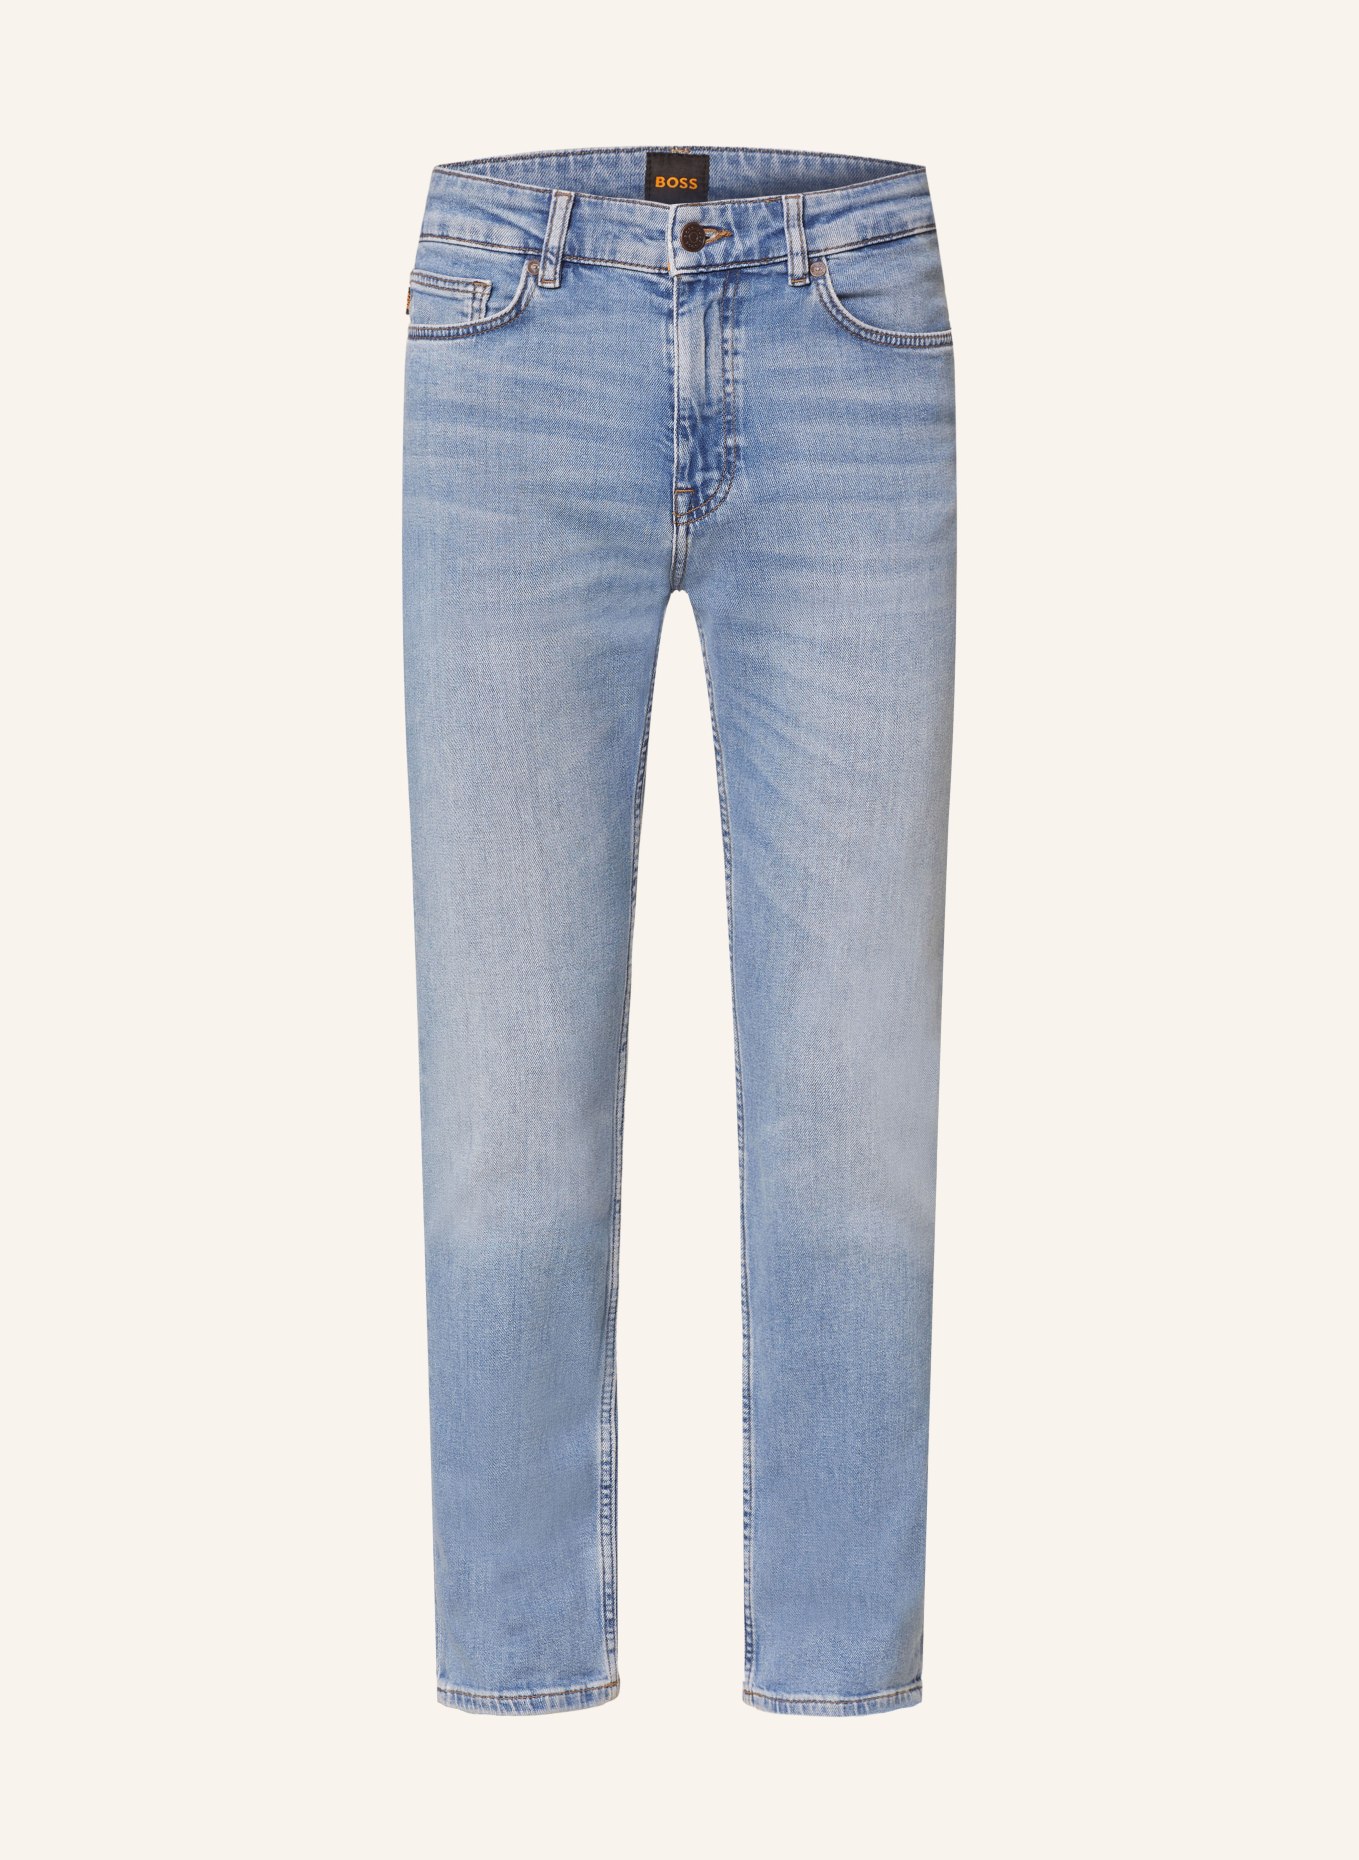 BOSS Jeans DELAWARE Slim Fit, Farbe: 430 BRIGHT BLUE (Bild 1)